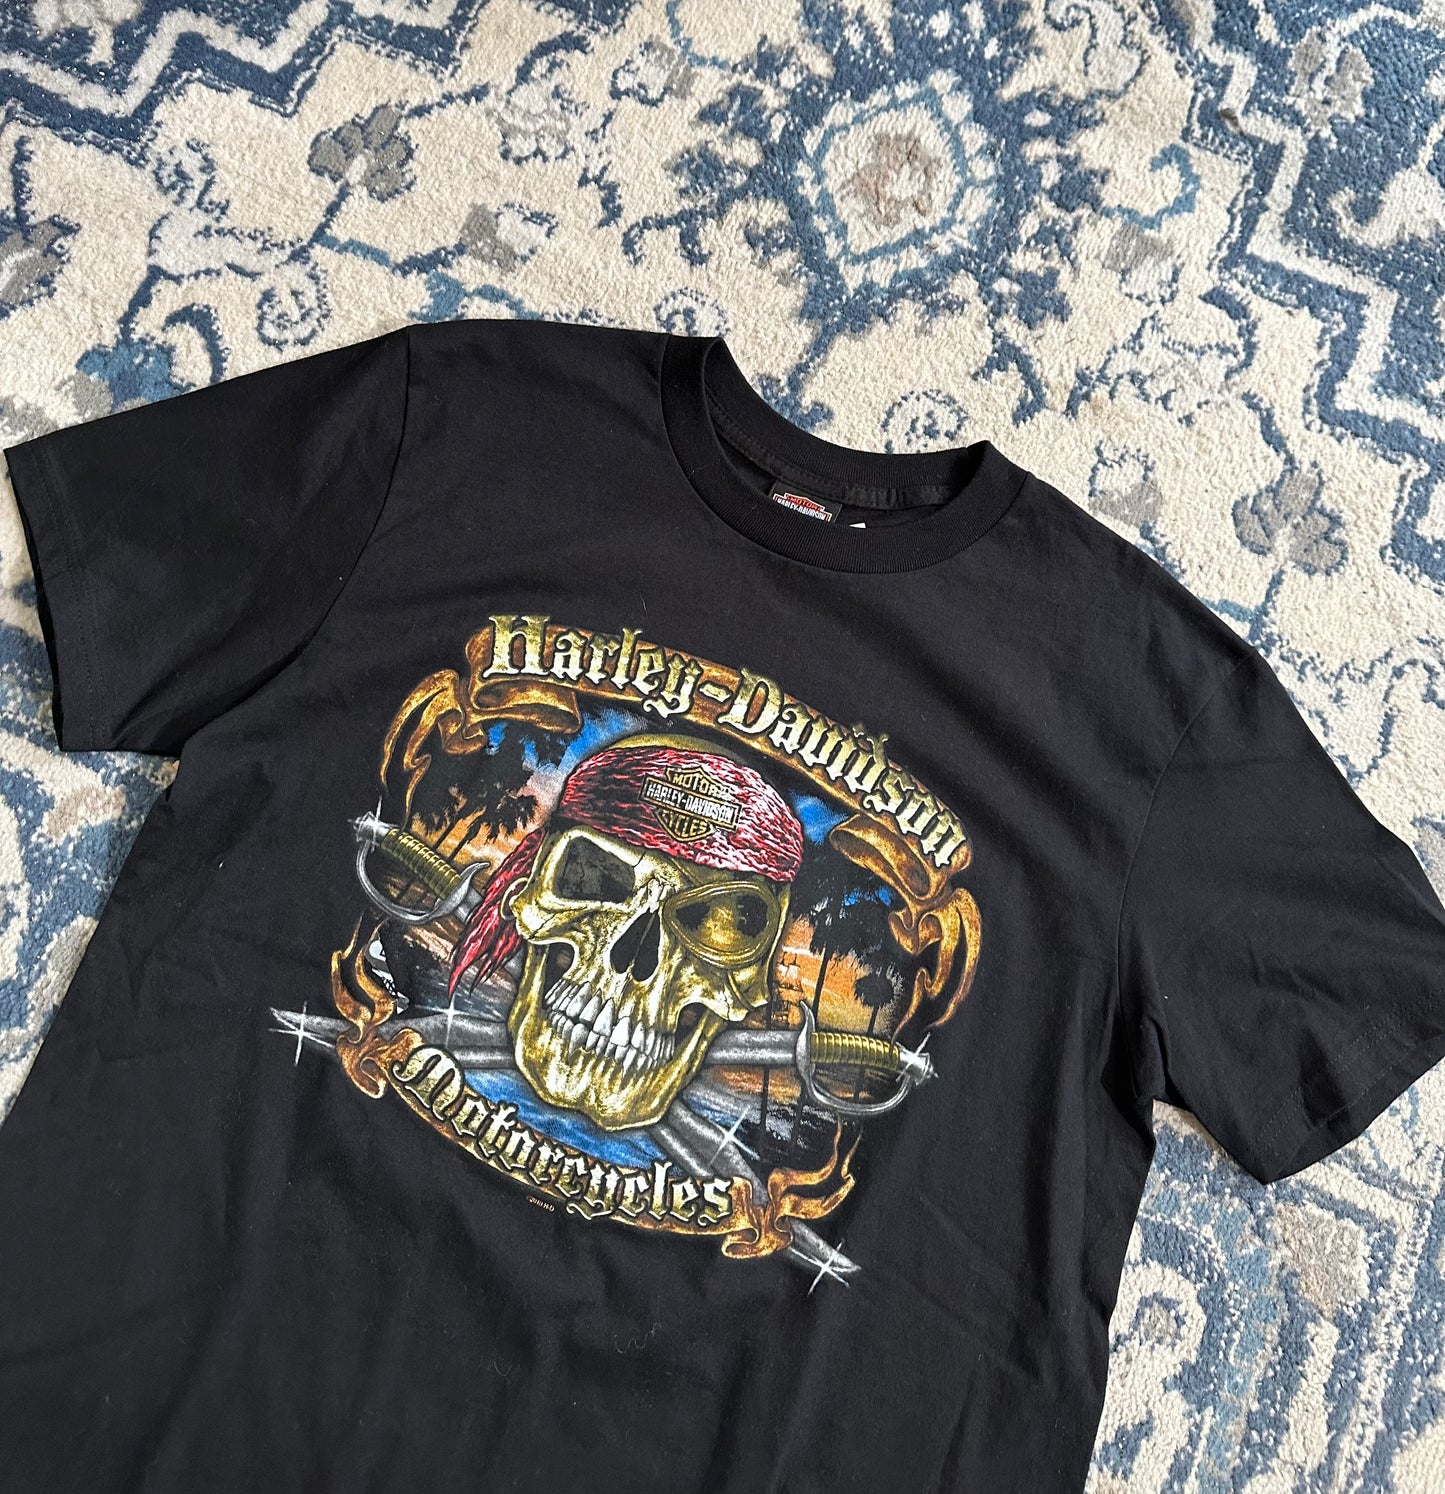 Harley Davidson 2010 Pirates Orlando, Florida T-shirt